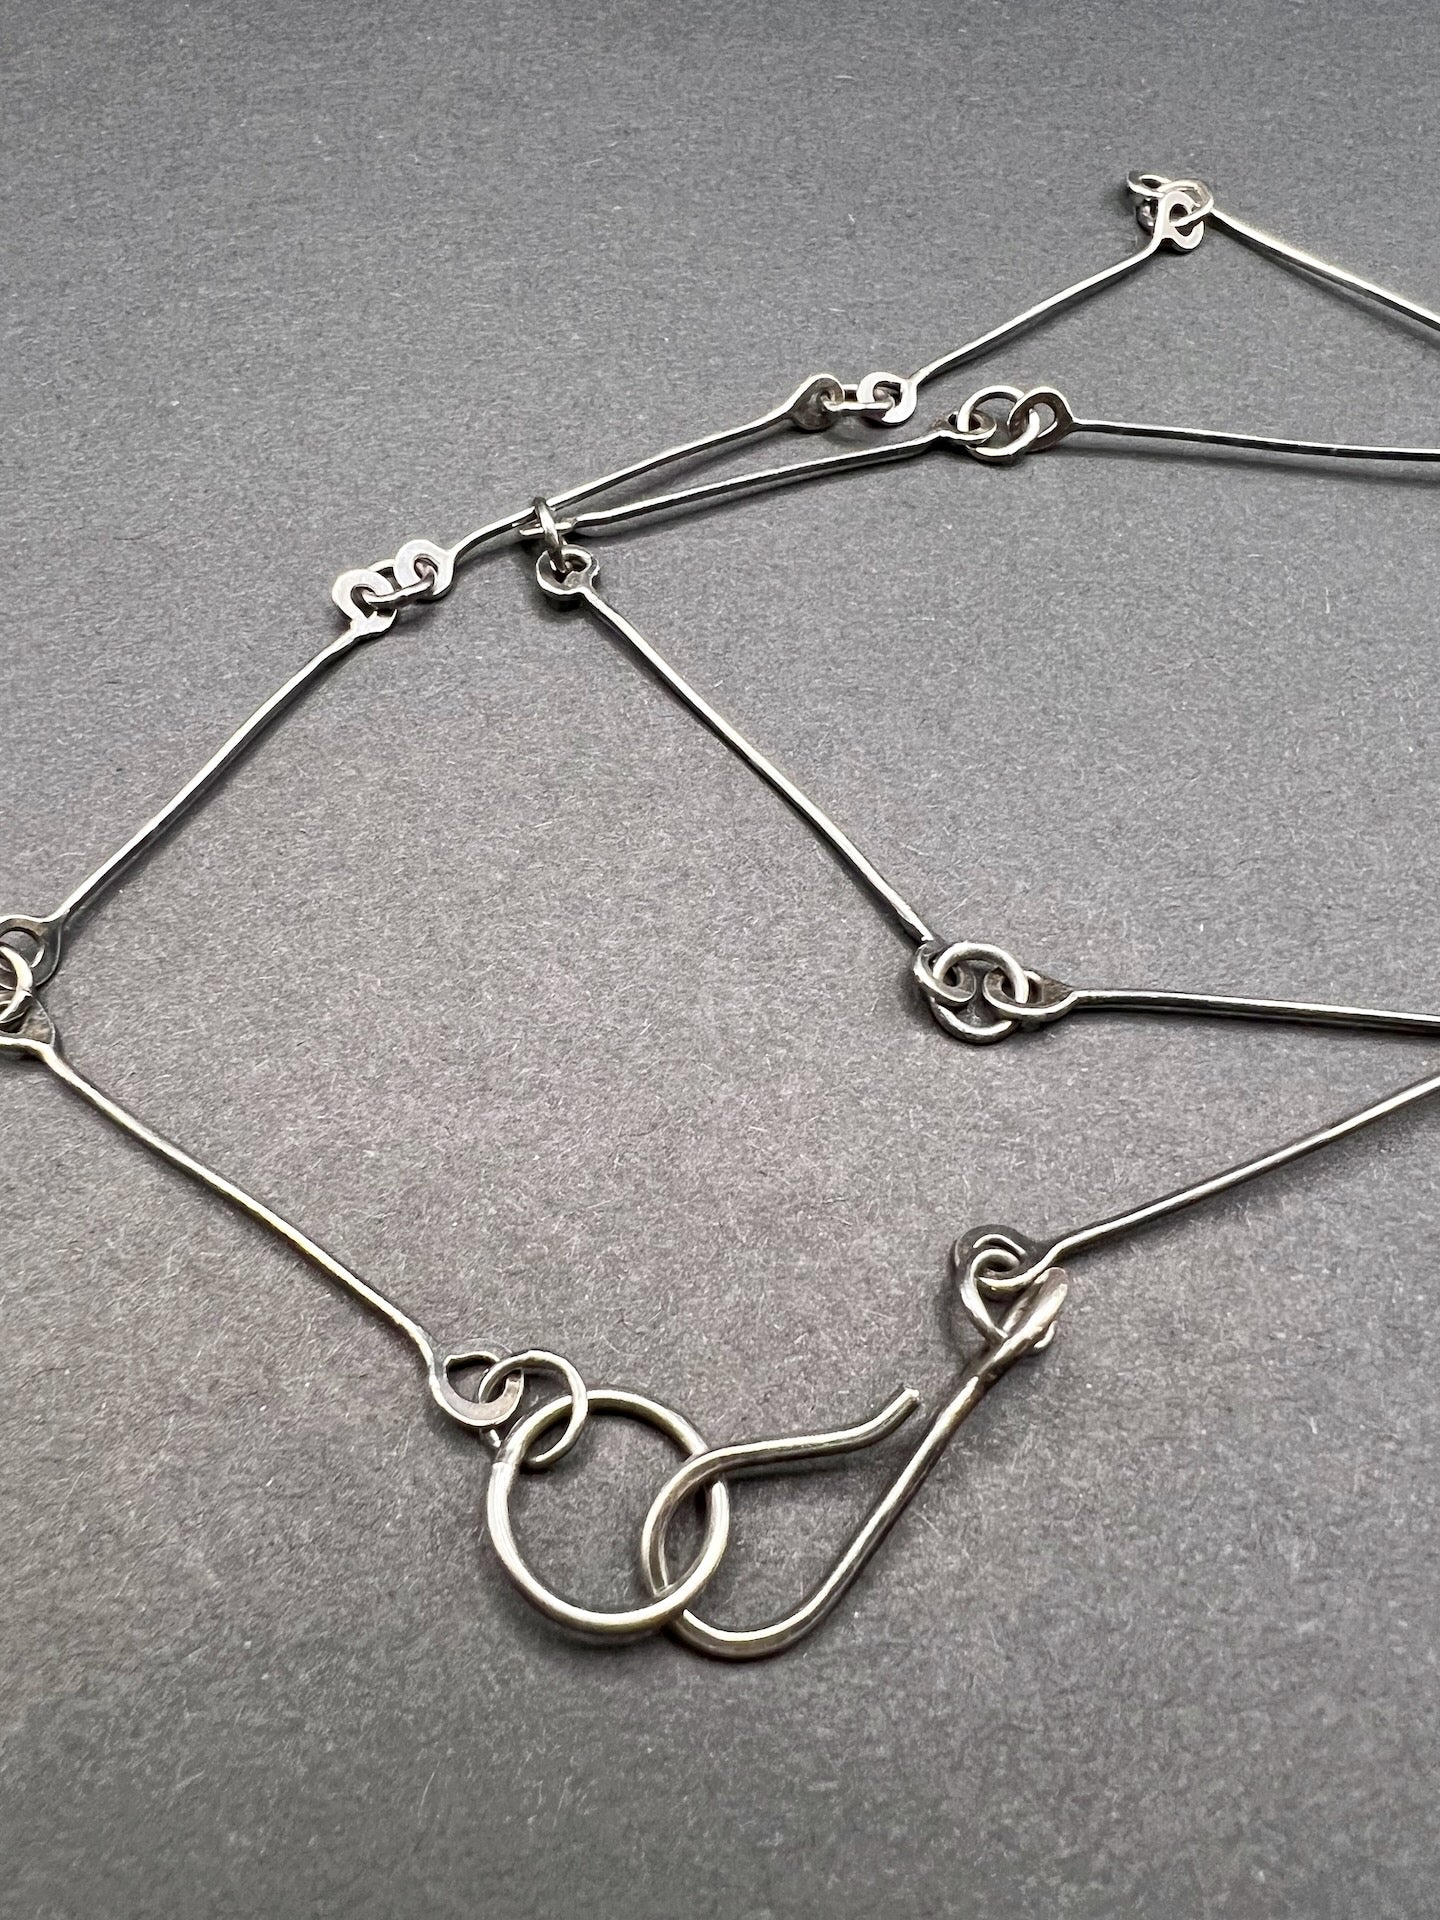 Oxidized handmade straight bar & link chain (21")